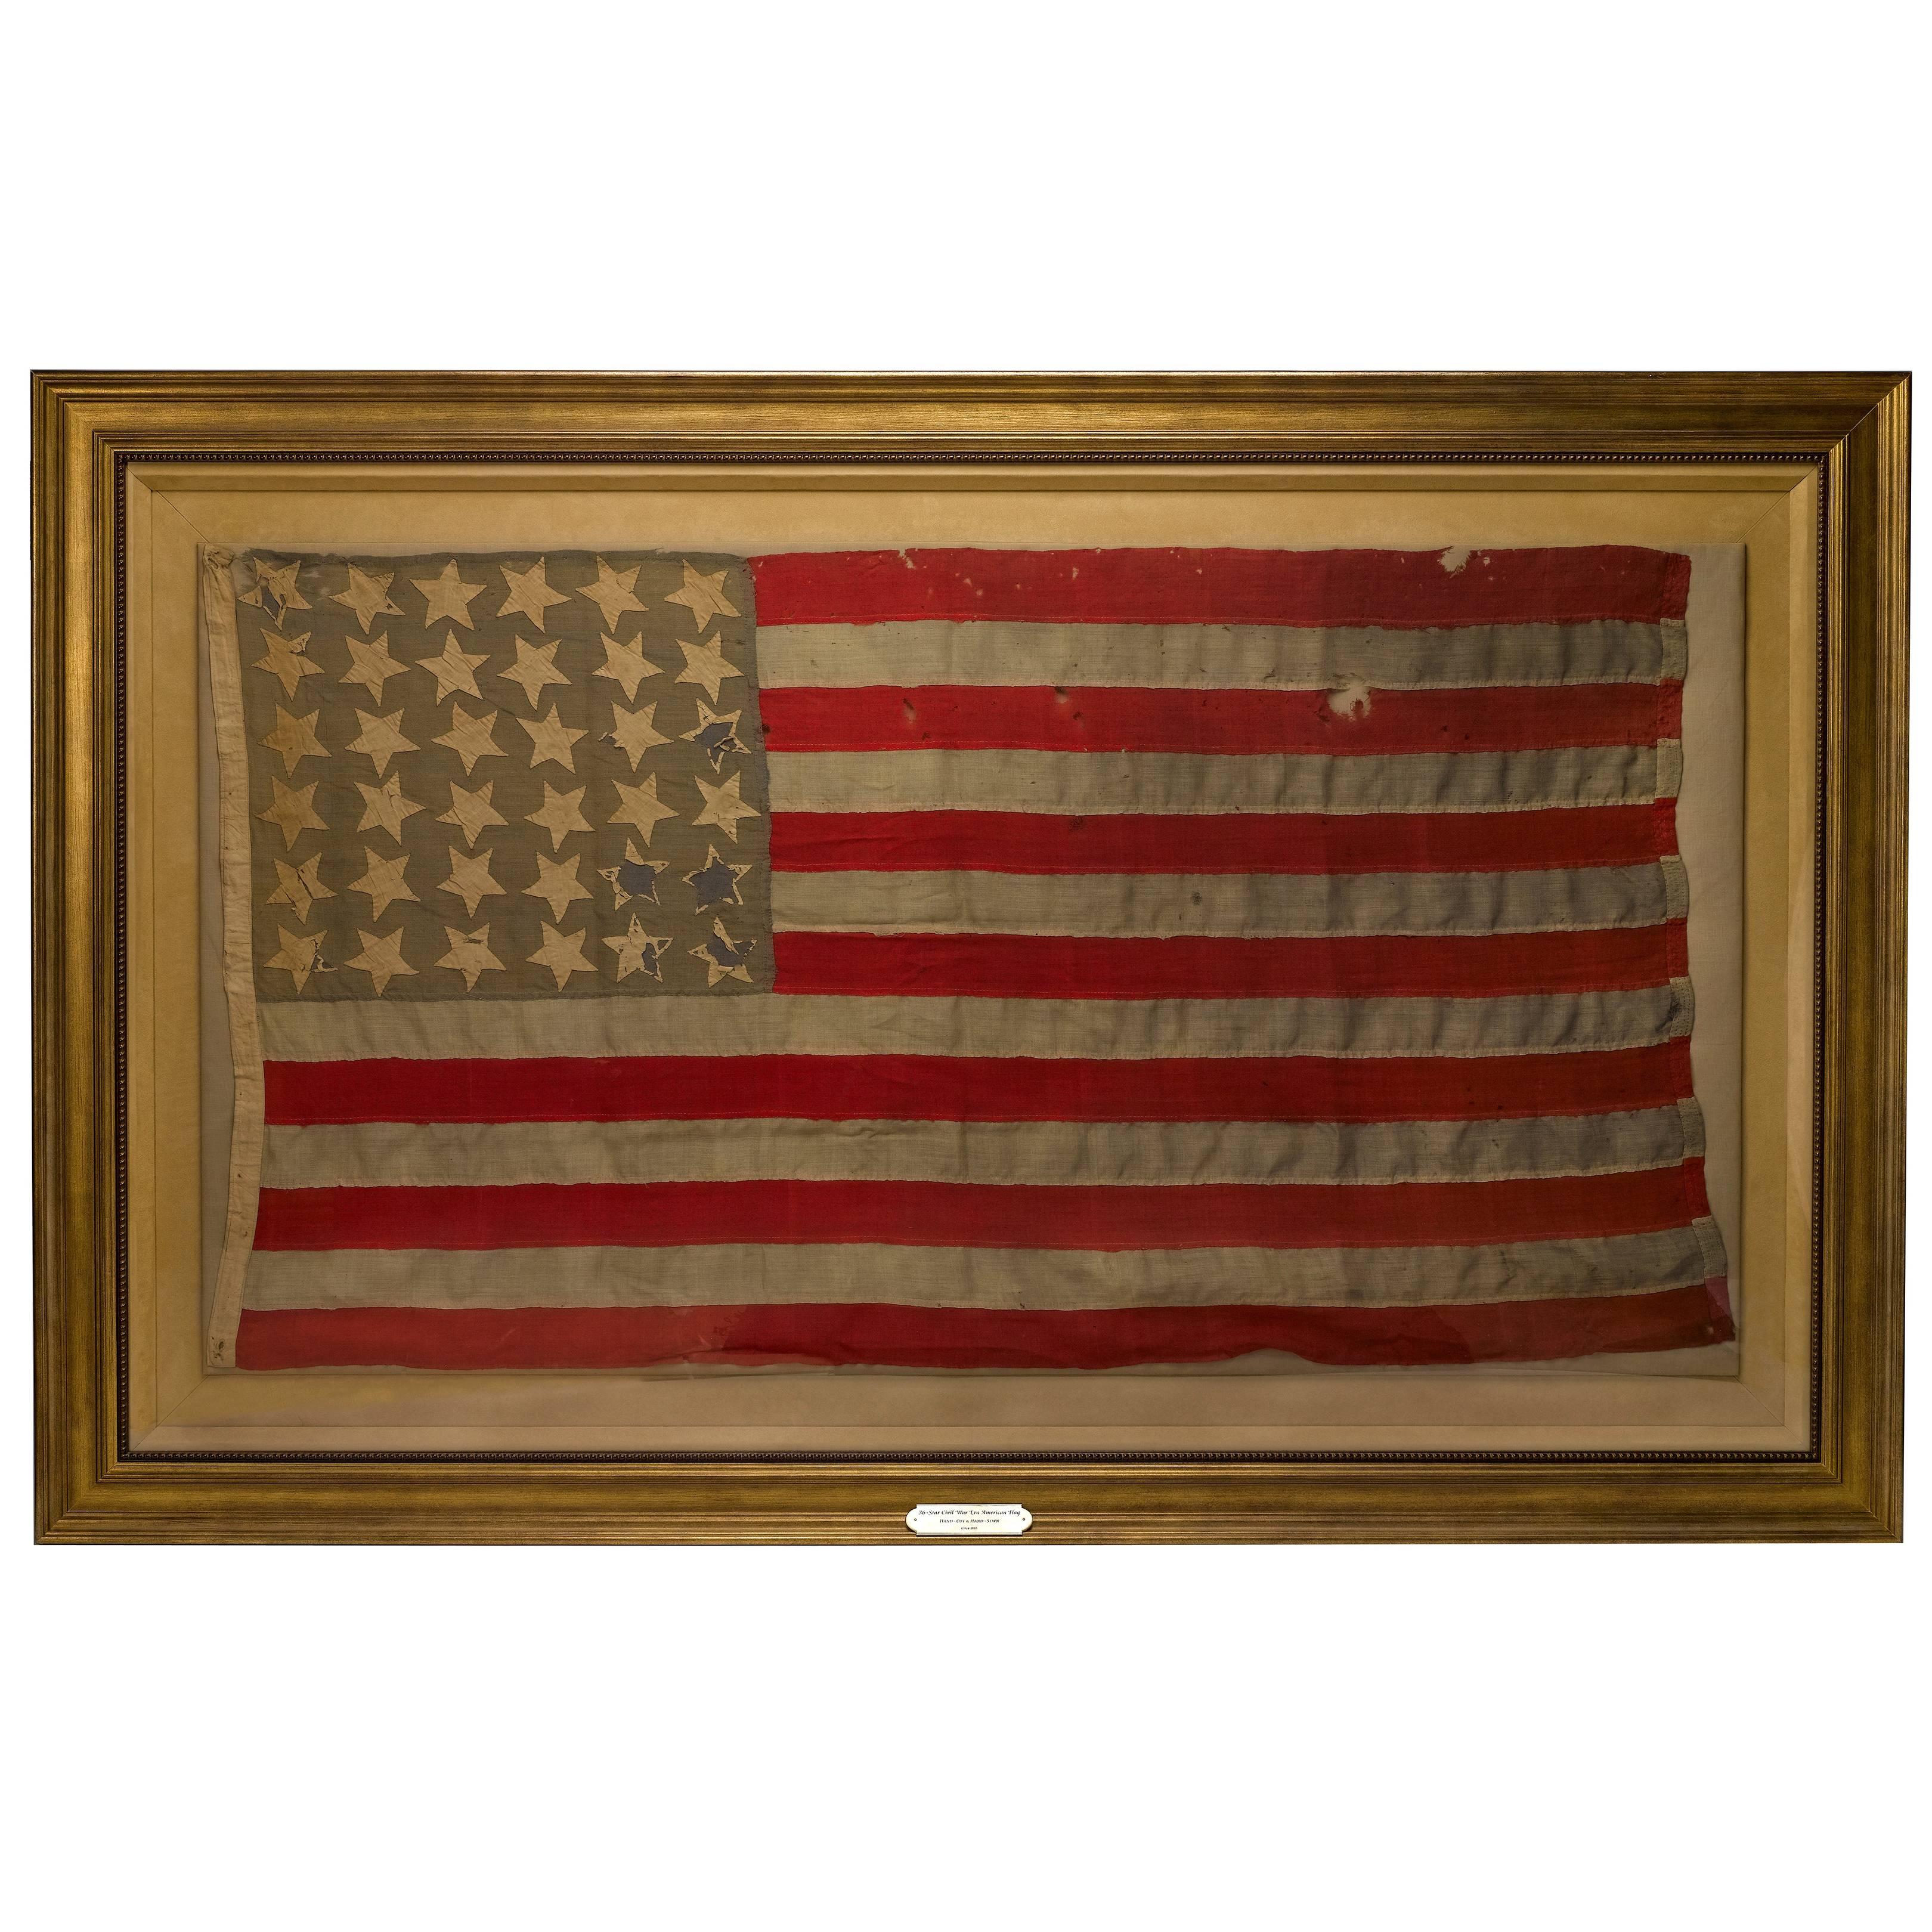 36-Star Civil War-Era Handmade American Flag, circa 1865